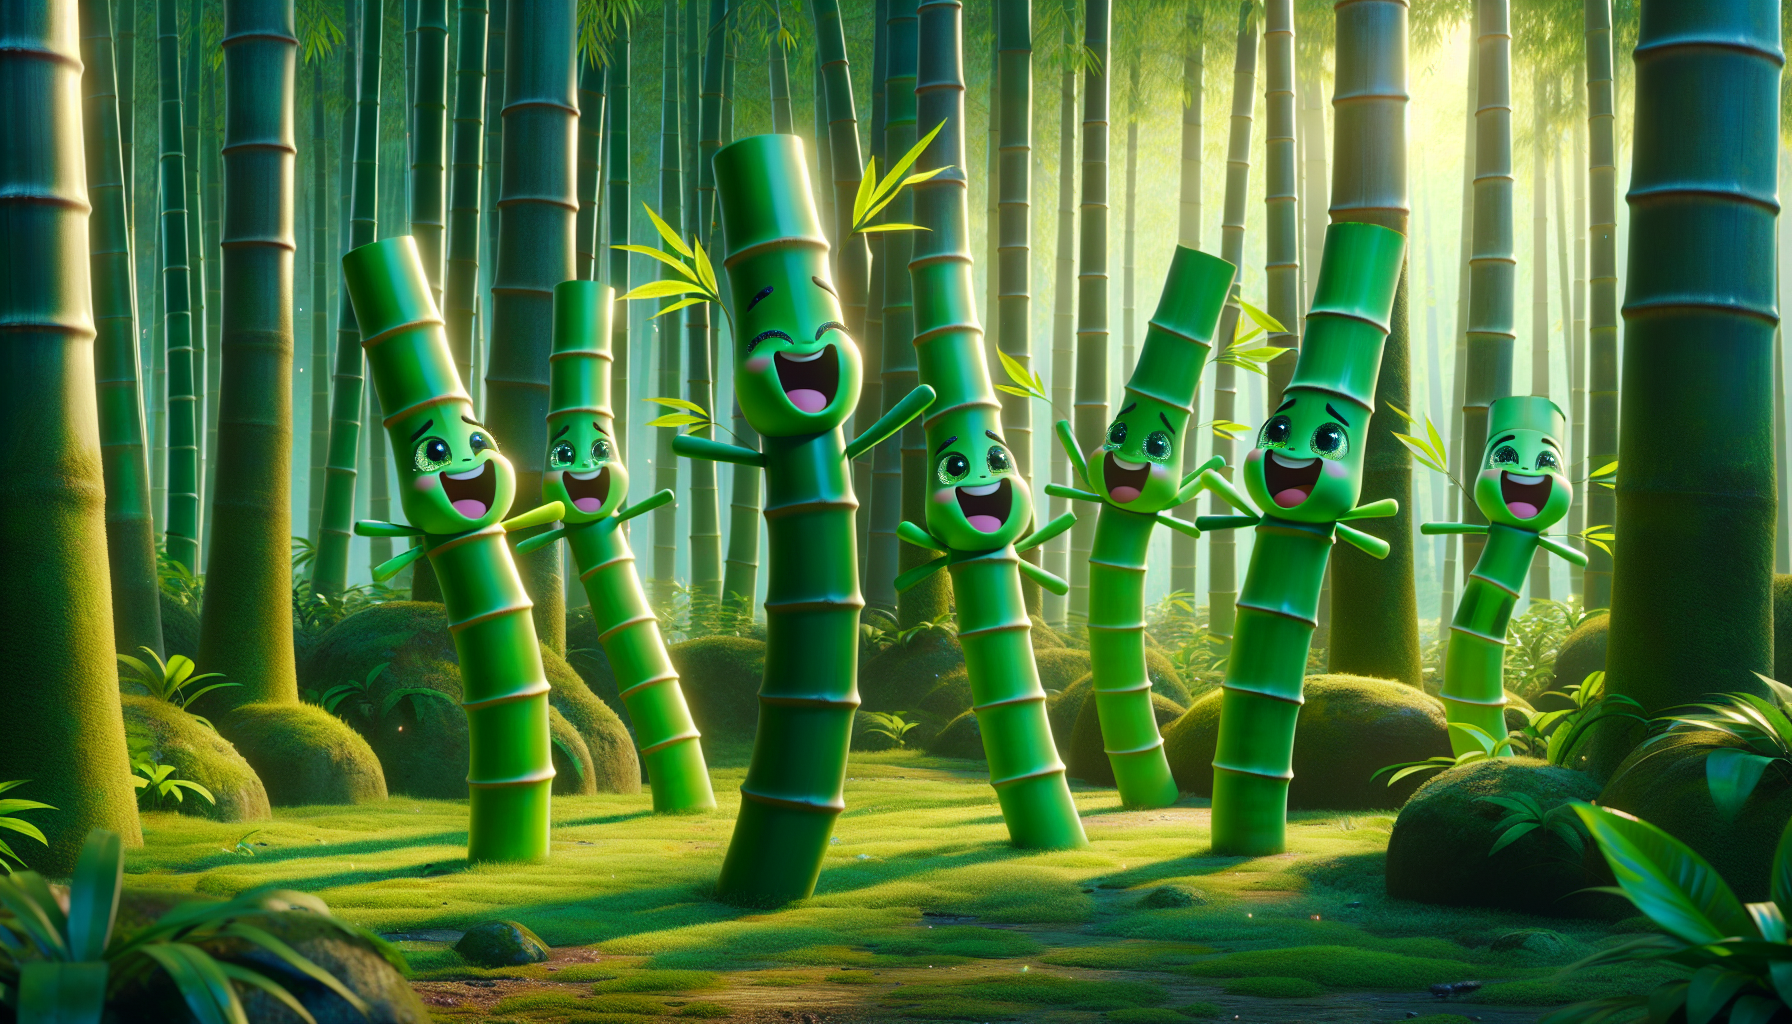 Bamboo Puns